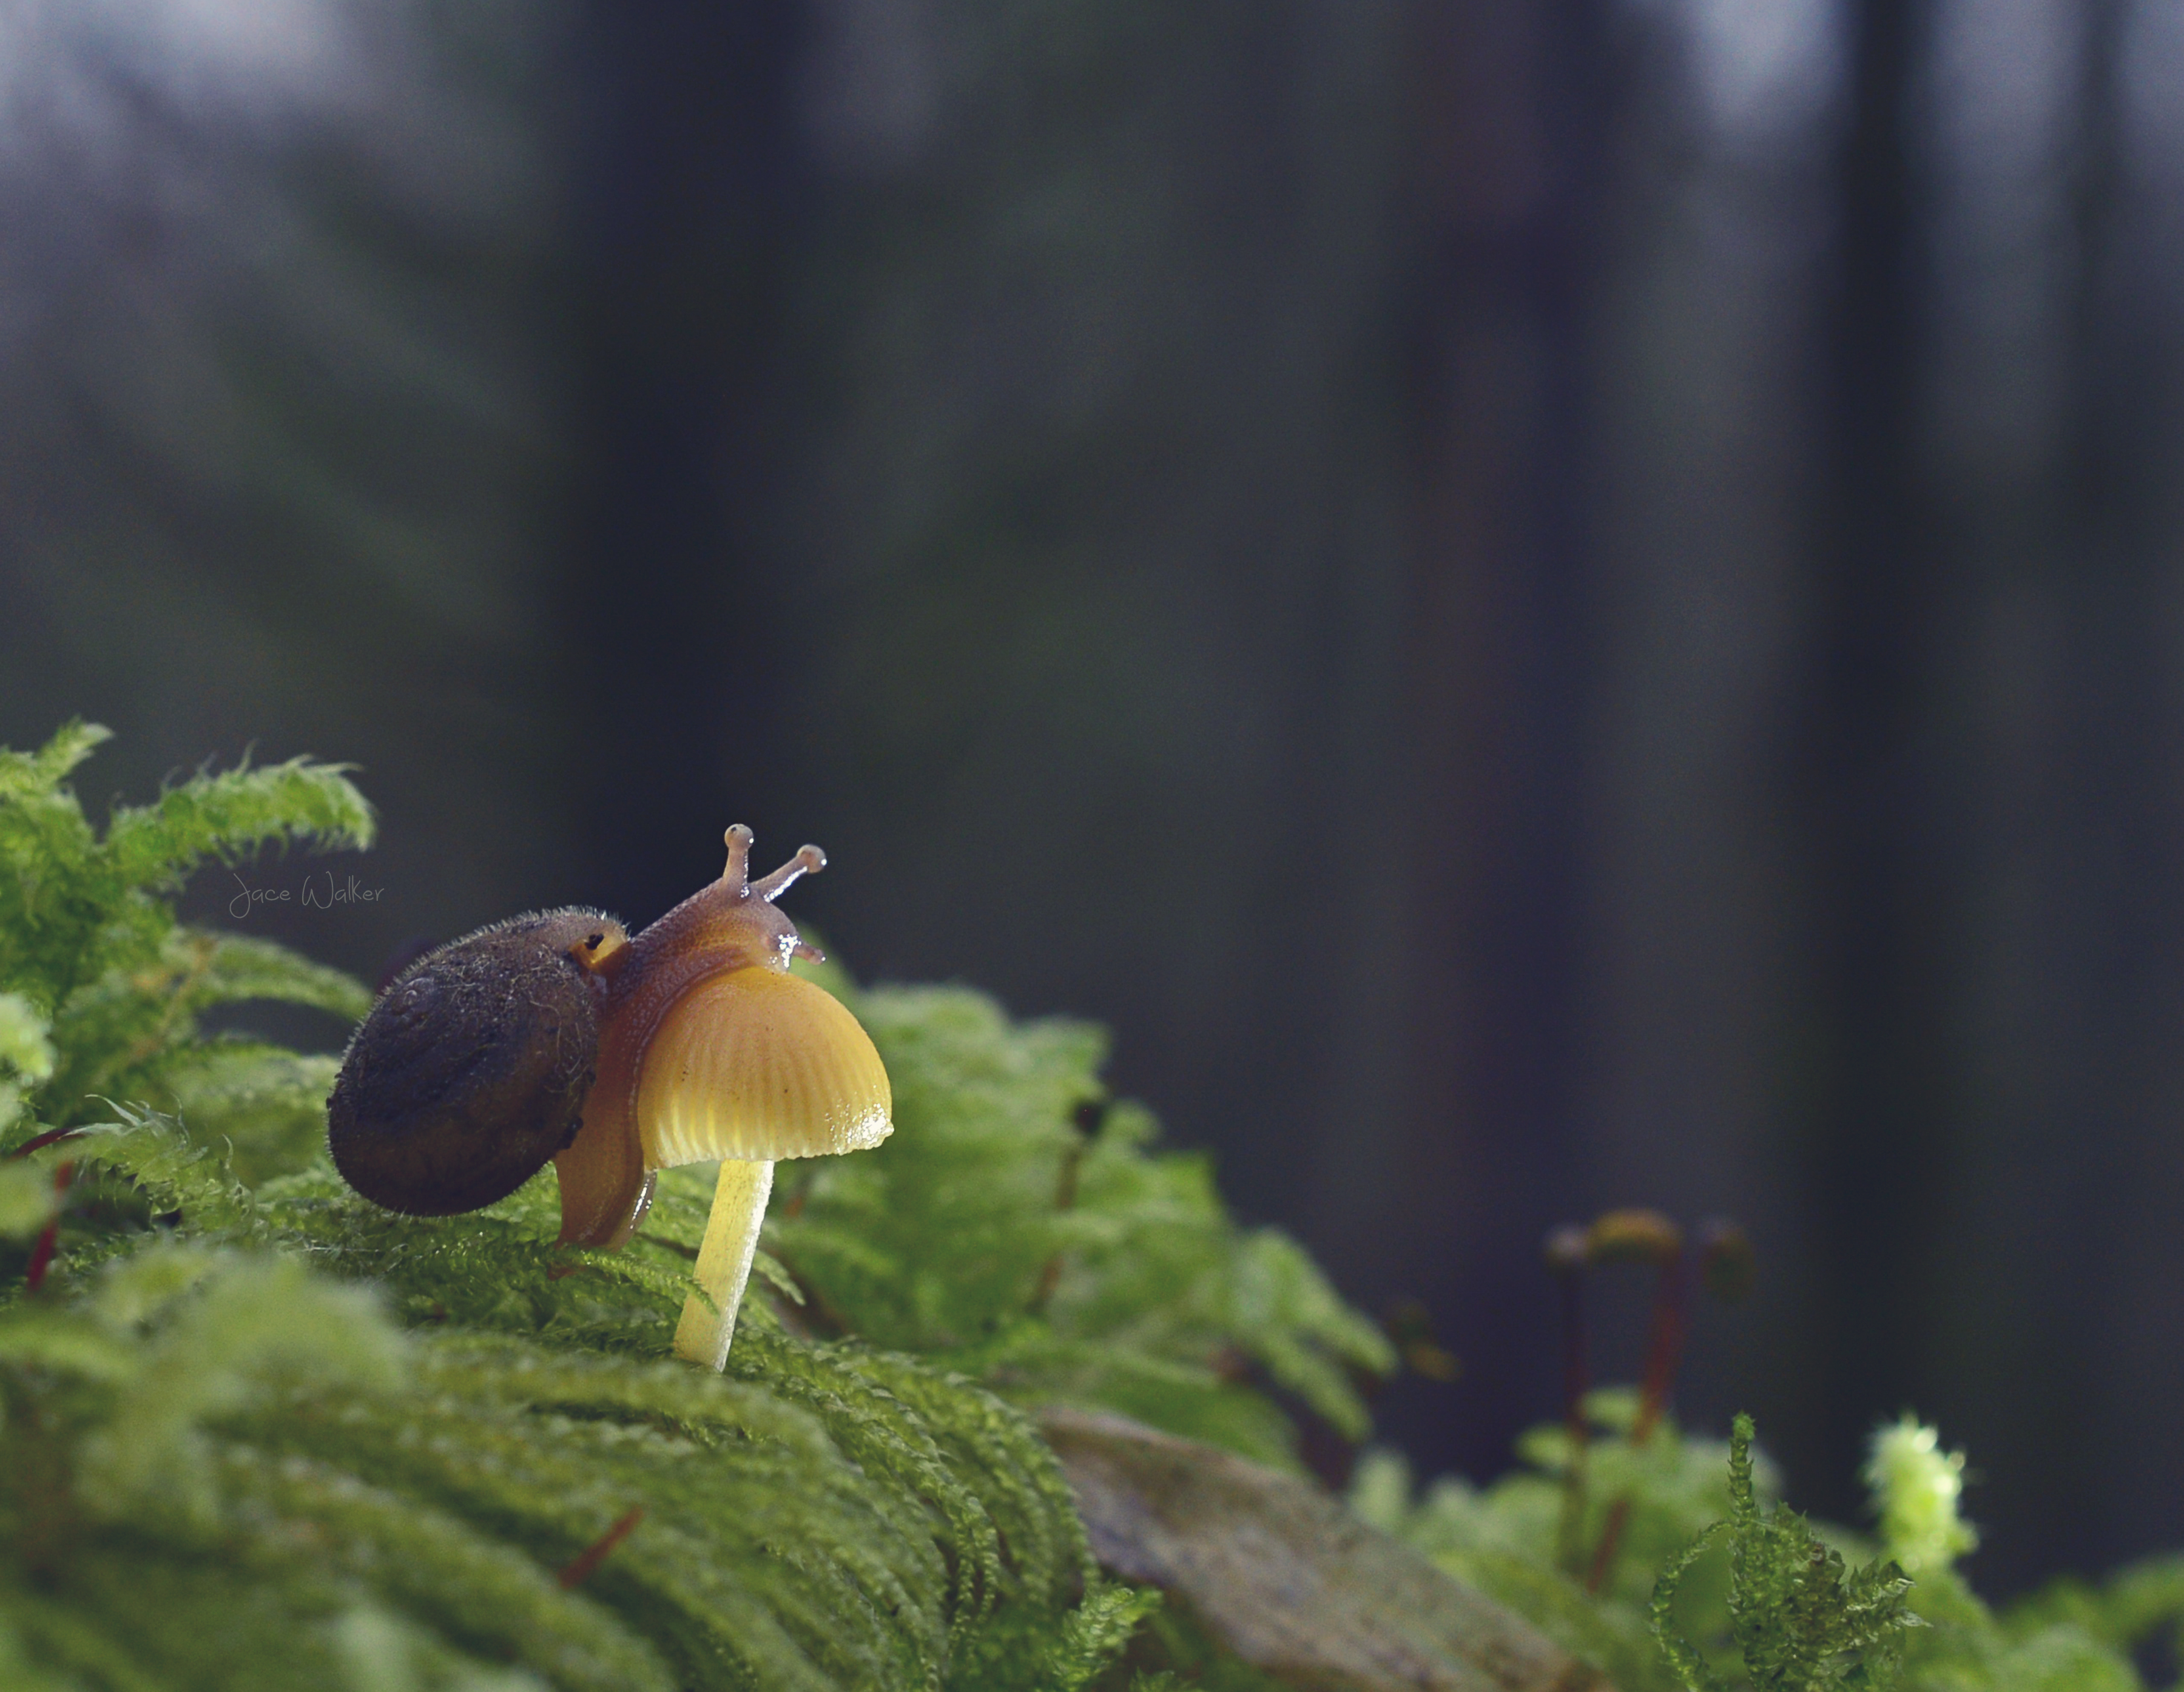 Macro Snail and Mushroom – The Bird Nerd